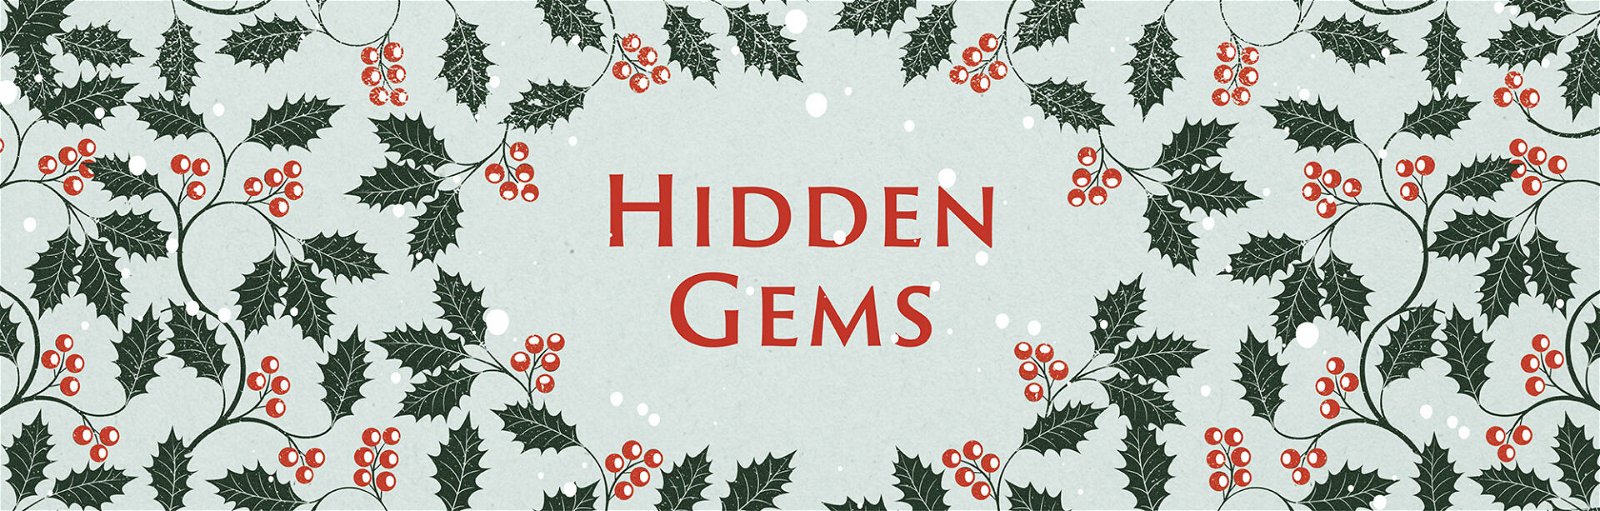 https://static.faber.co.uk/wp-content/uploads/2021/11/Faber-Christmas-Gift-Guide-Hidden-Gems-1-1920x613.jpg